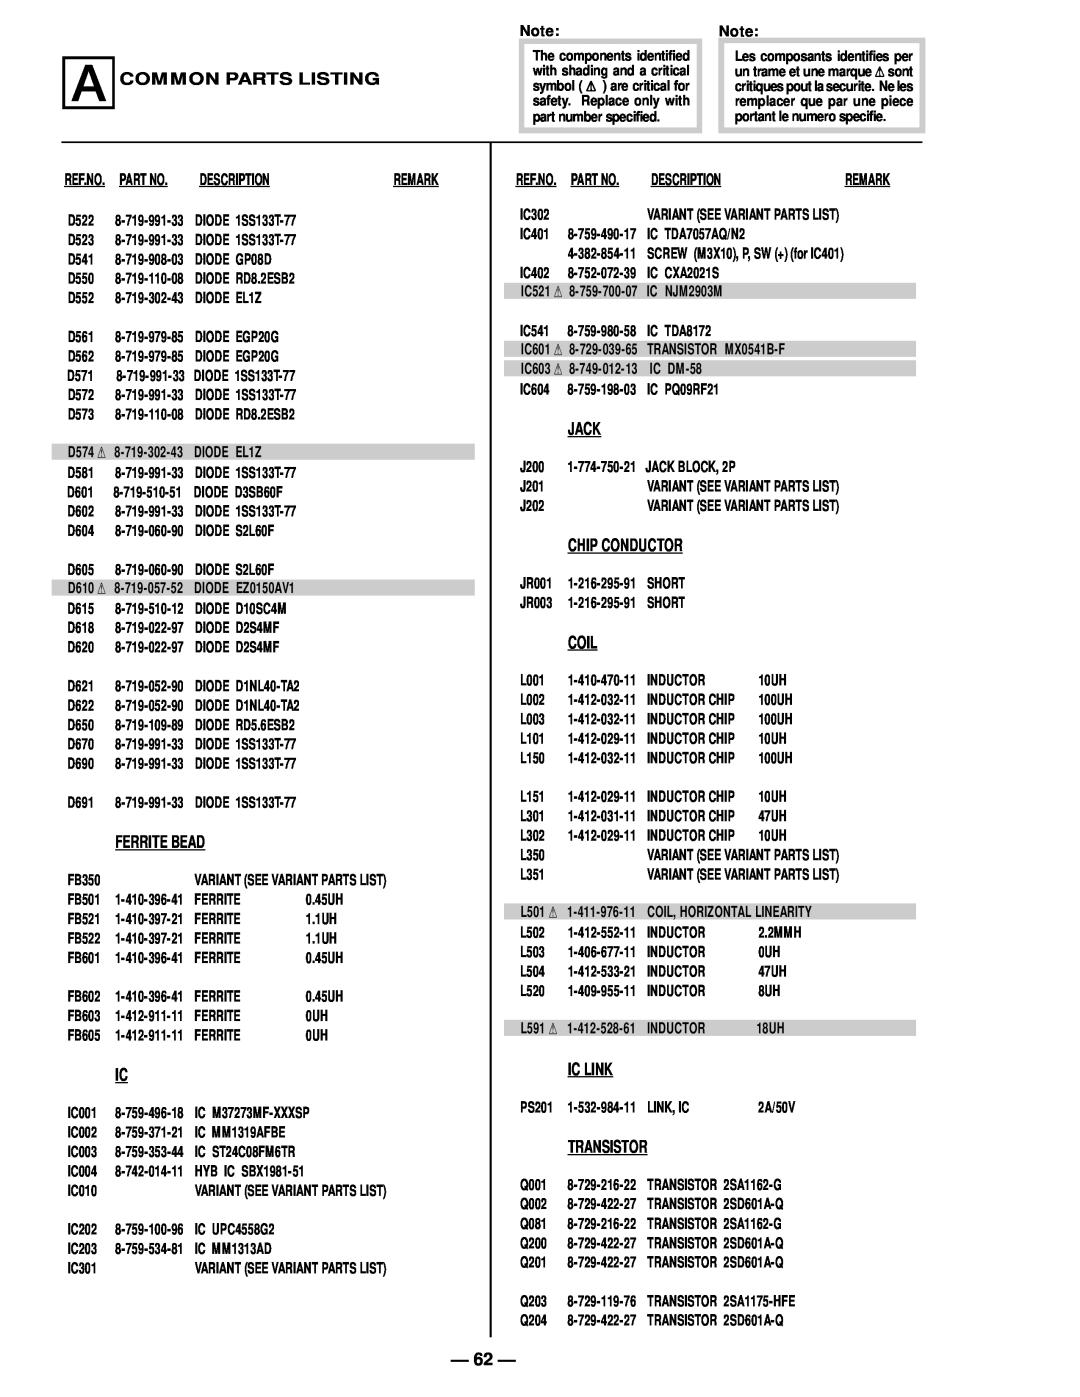 Sony KV-29SL65C, KV-29SL40C, KV-29XL40M, KV-29SL40A, KV-29XL40P, KV-29SL45 Acommon Parts Listing, Description, Remark 